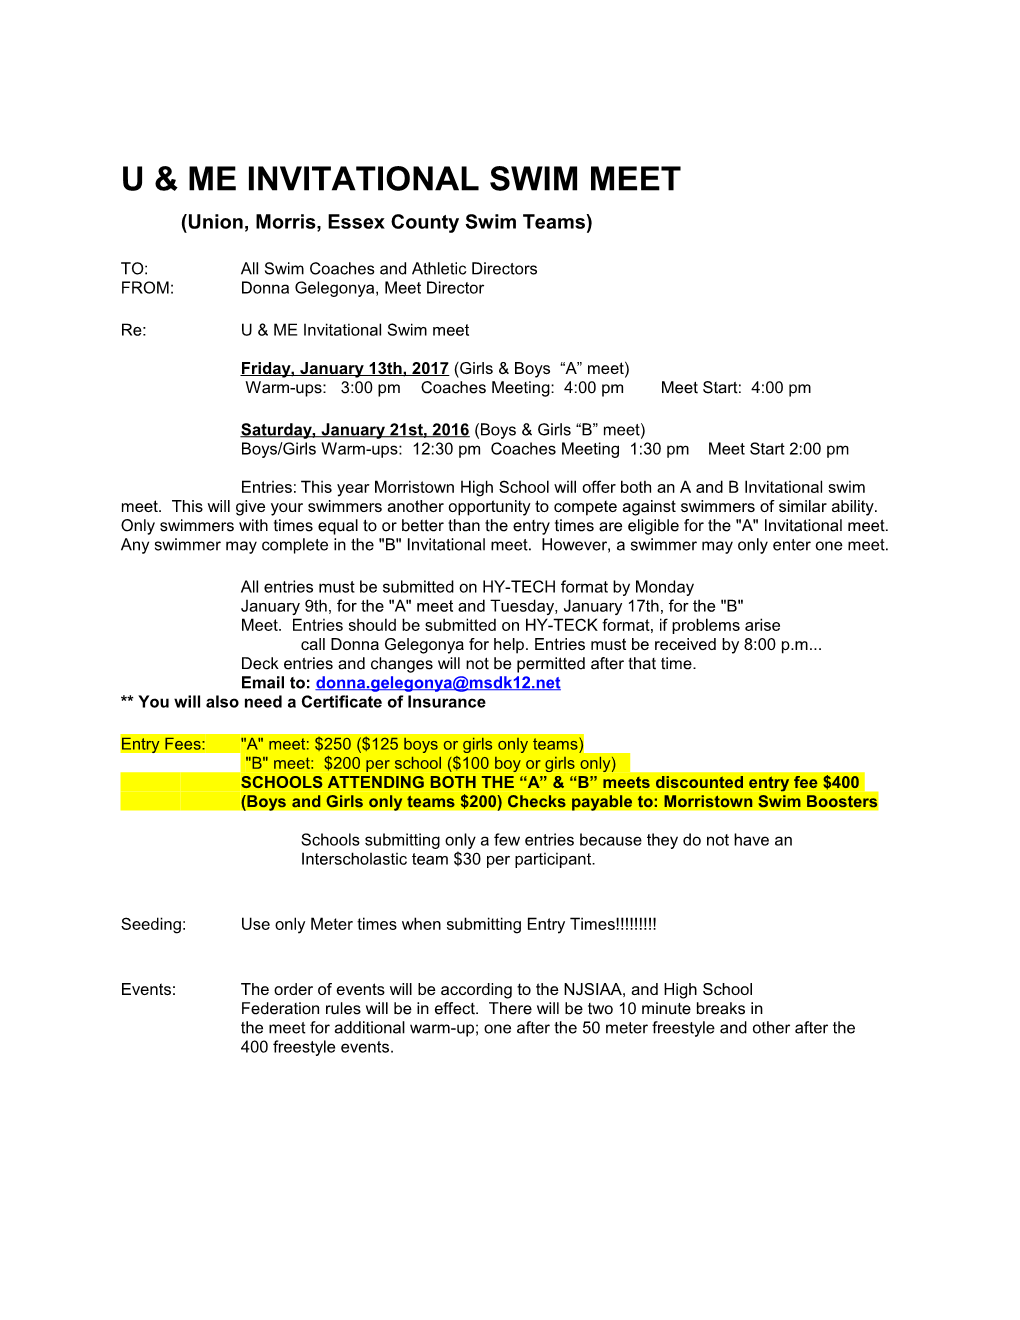 U & Me Invitational Swim Meet